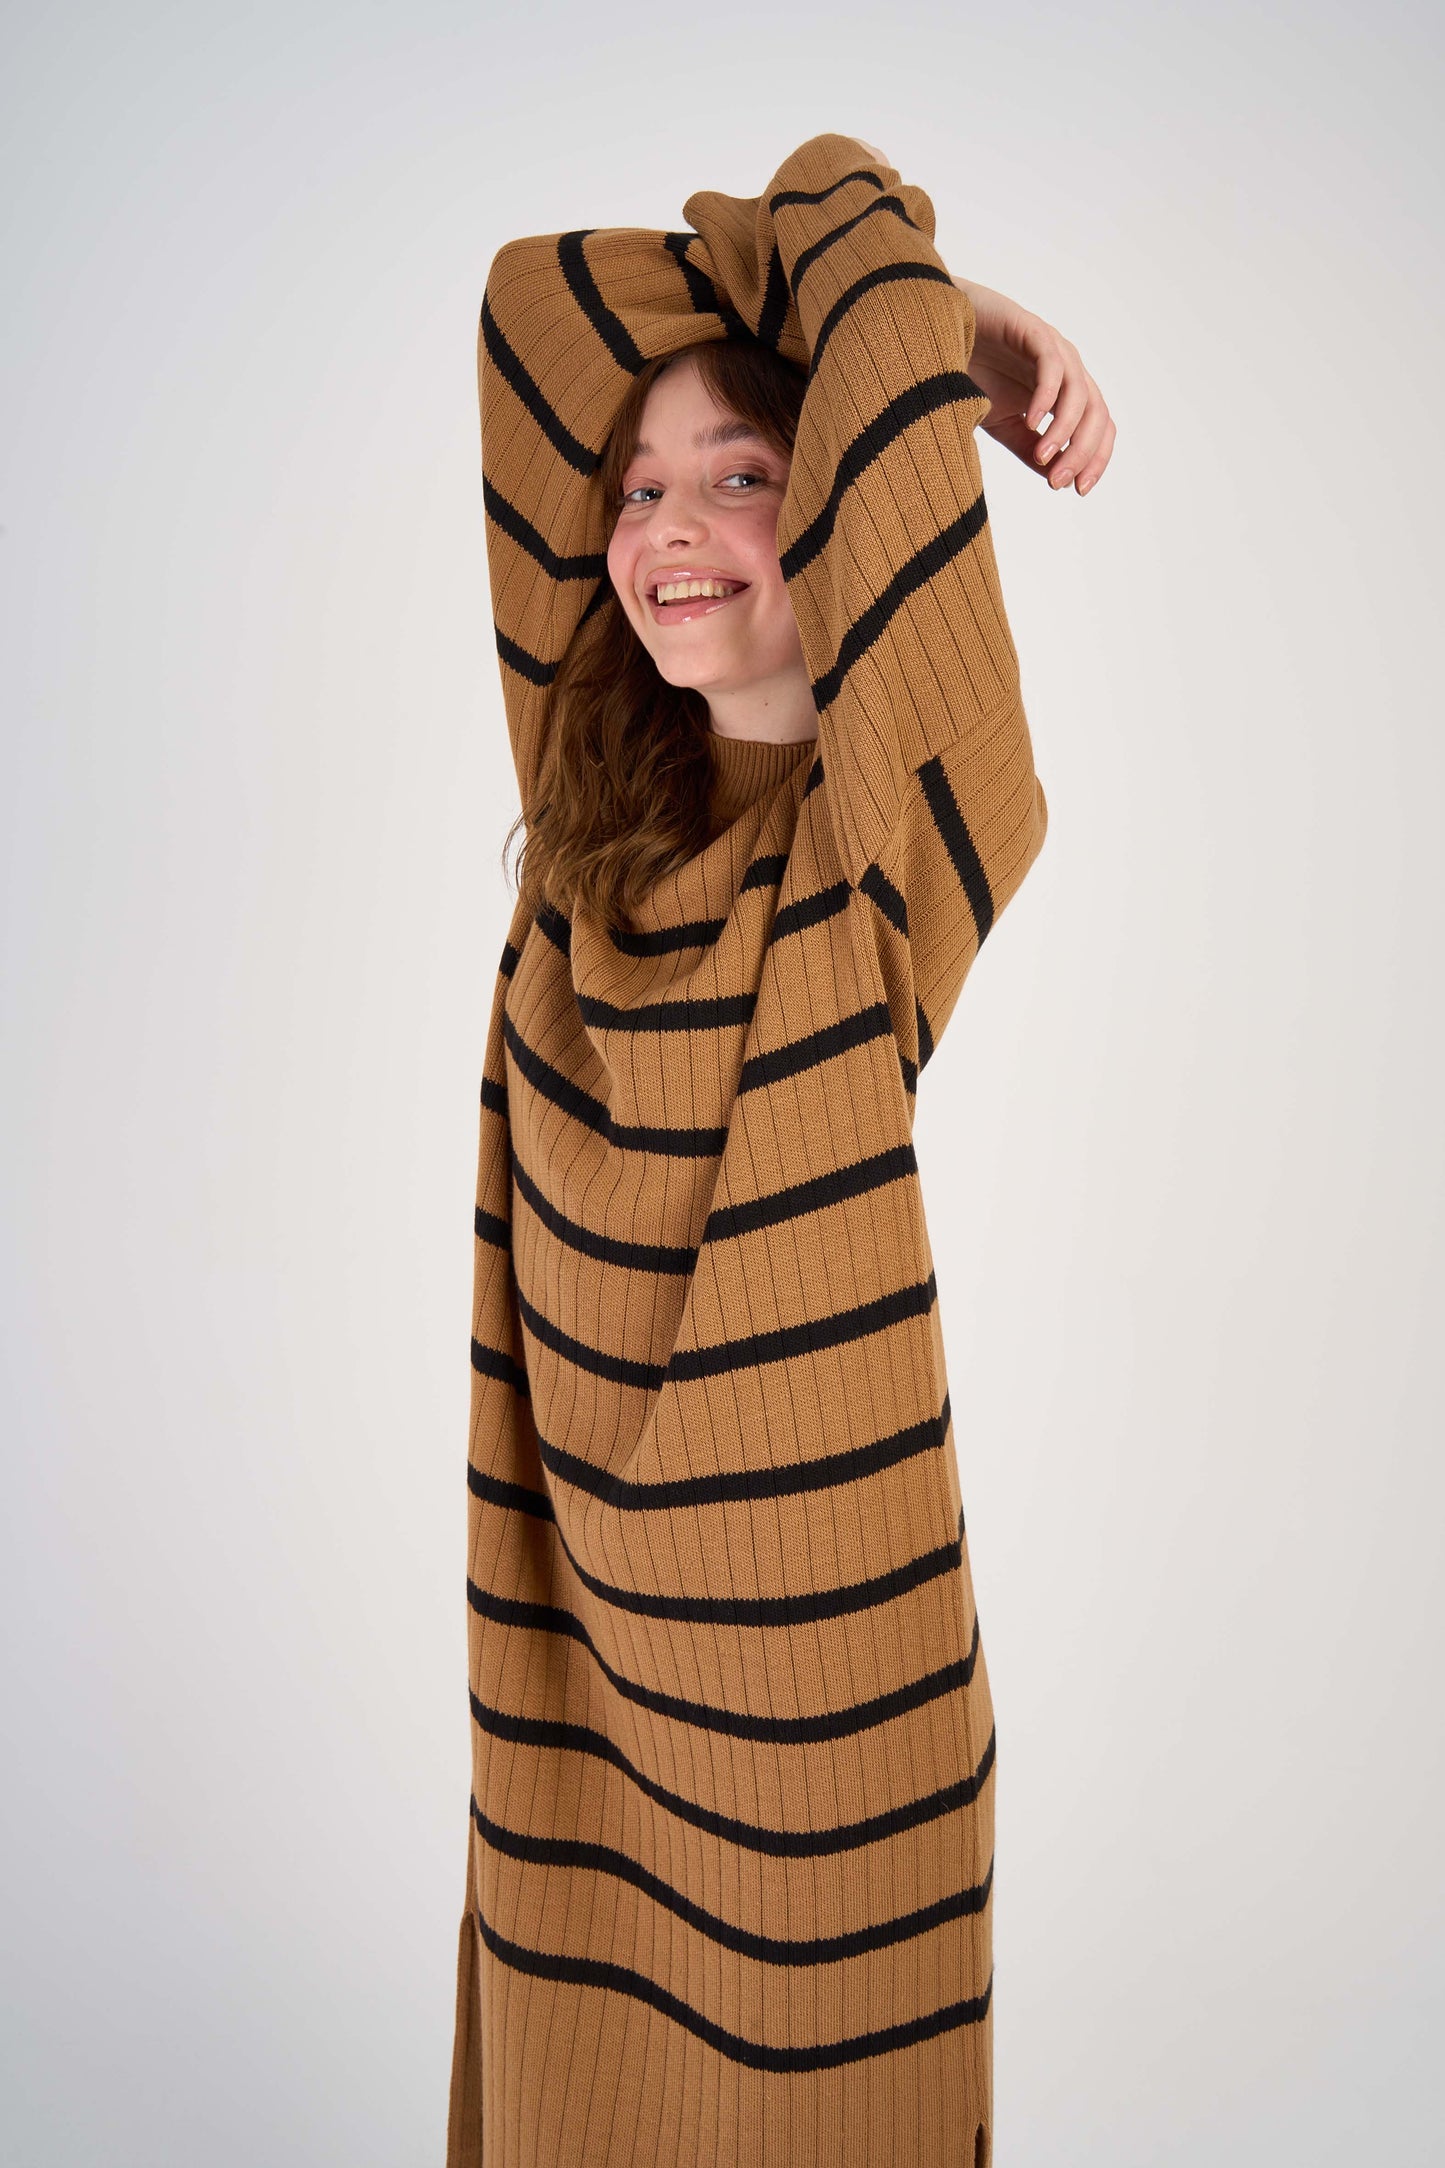 Long Knit Striped Dress